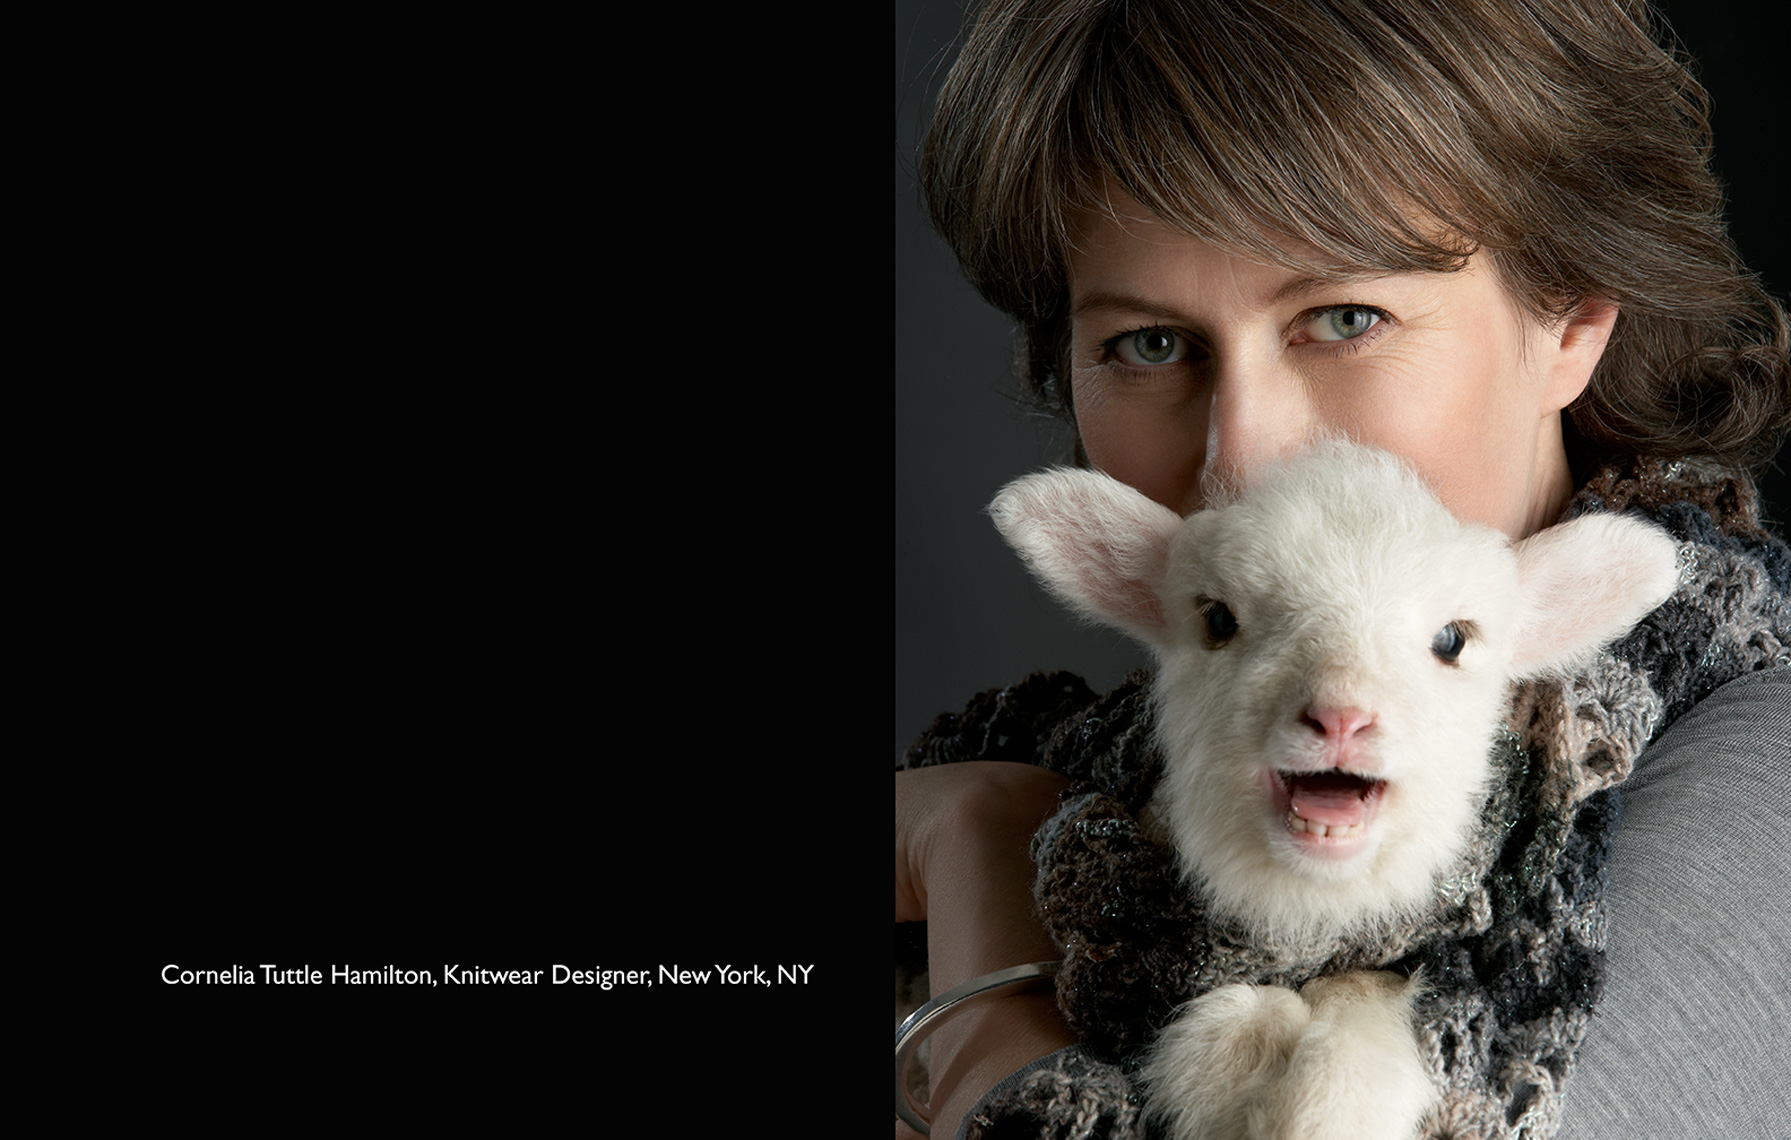 cornelia tuttle hamilton knitwear designer with baby lamb